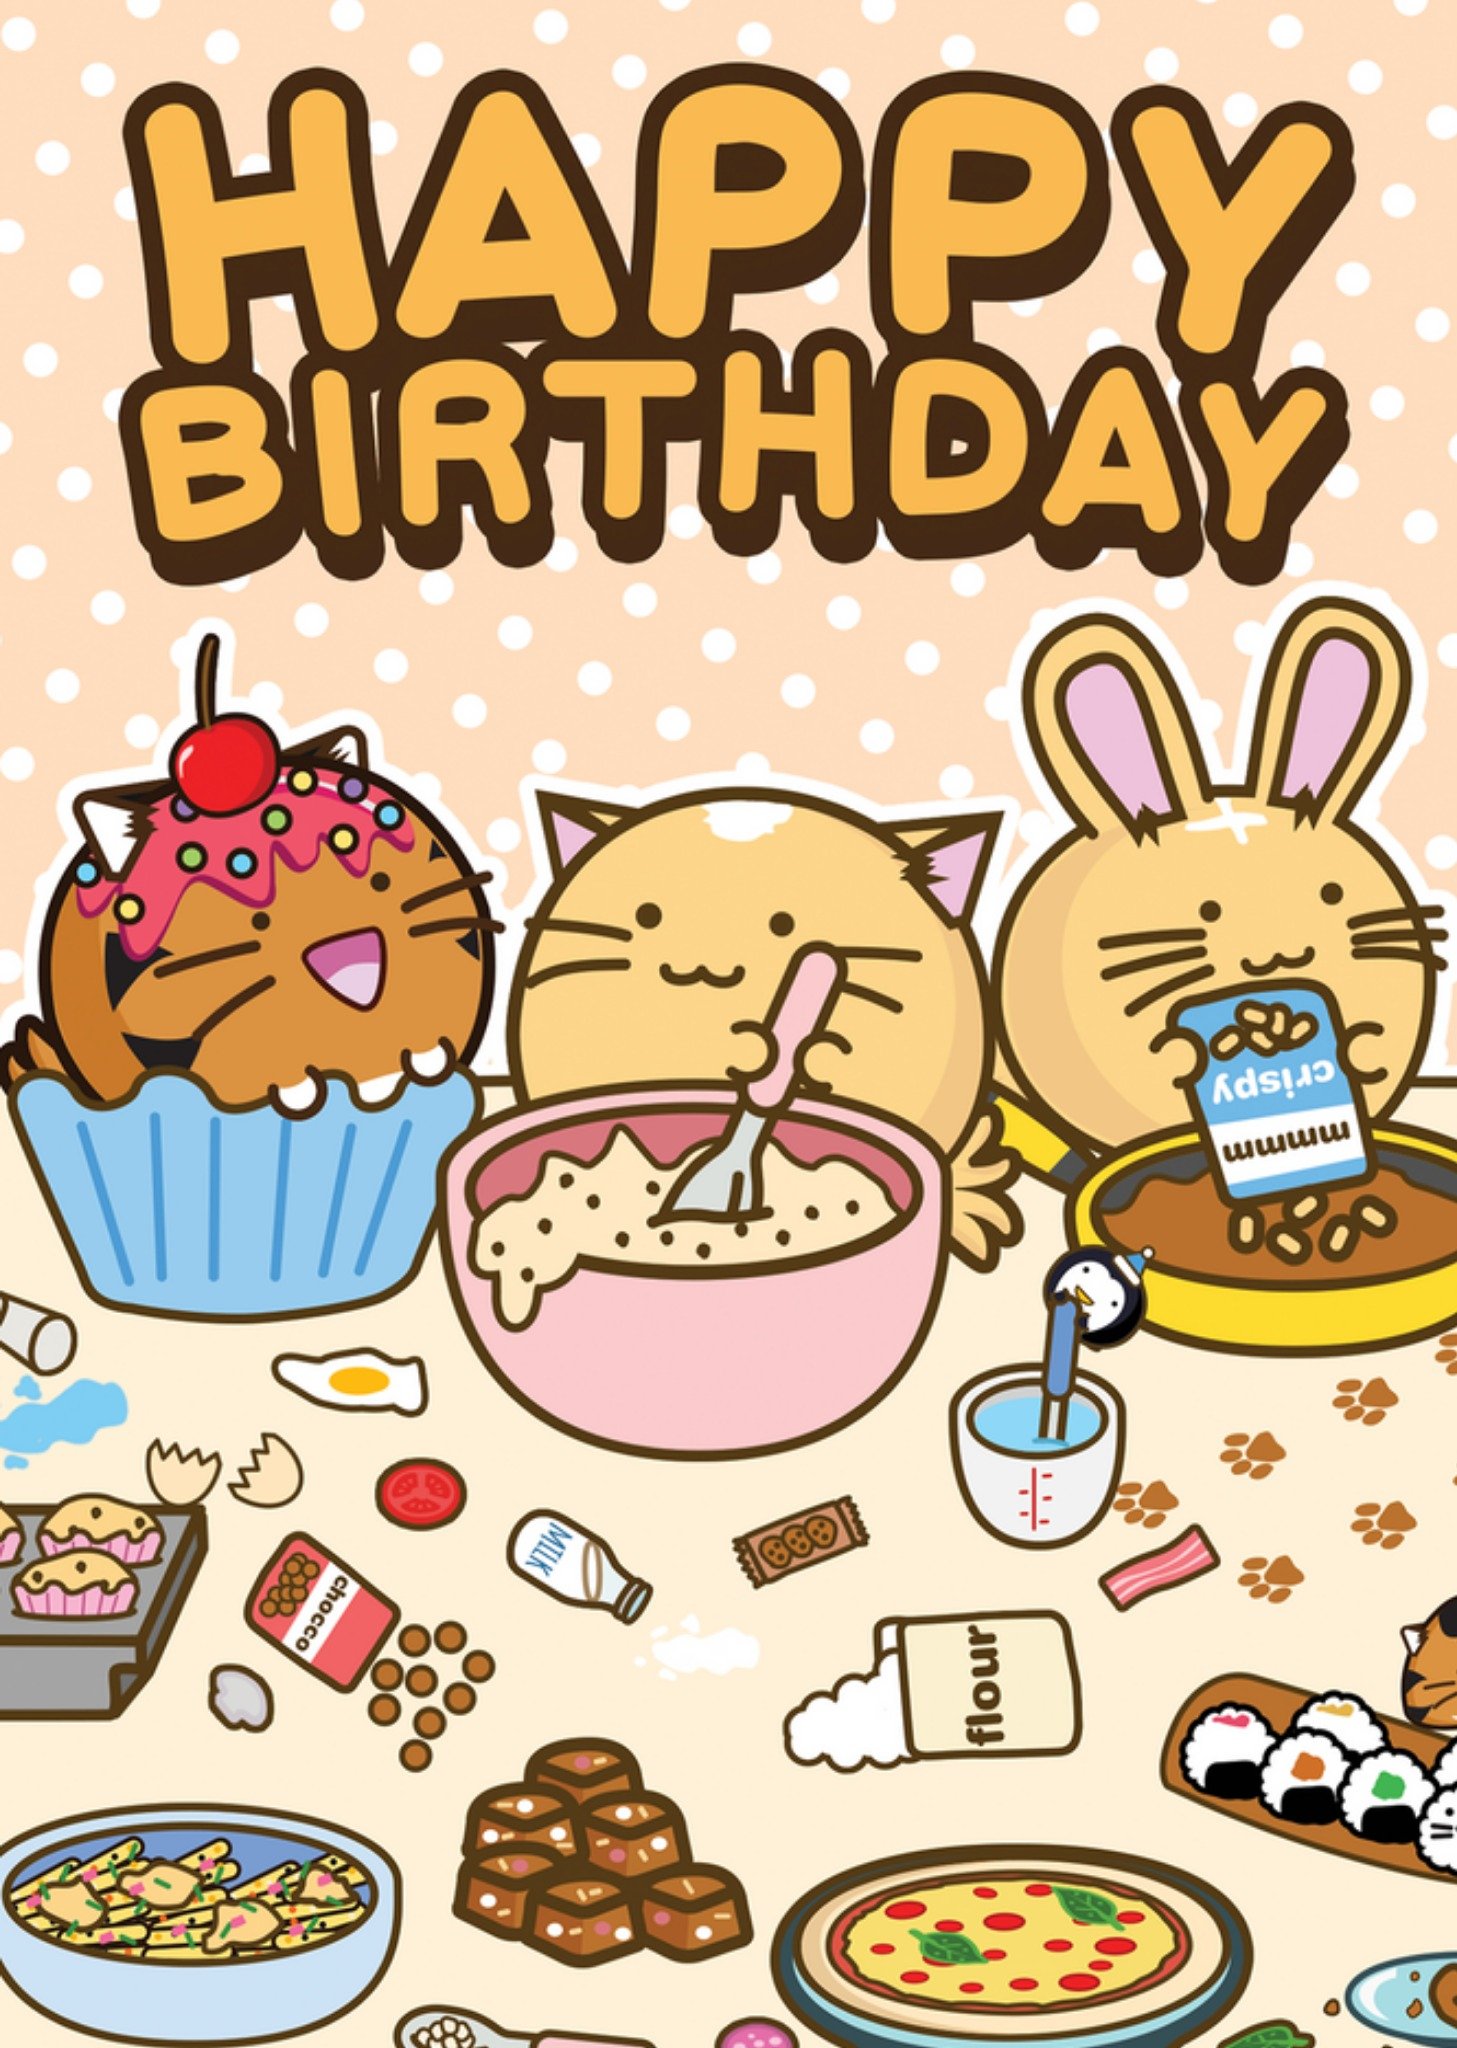 Moonpig Fuzzballs Illustrated Baking Cuddly Cartoon Characters Happy Birthday Card Ecard